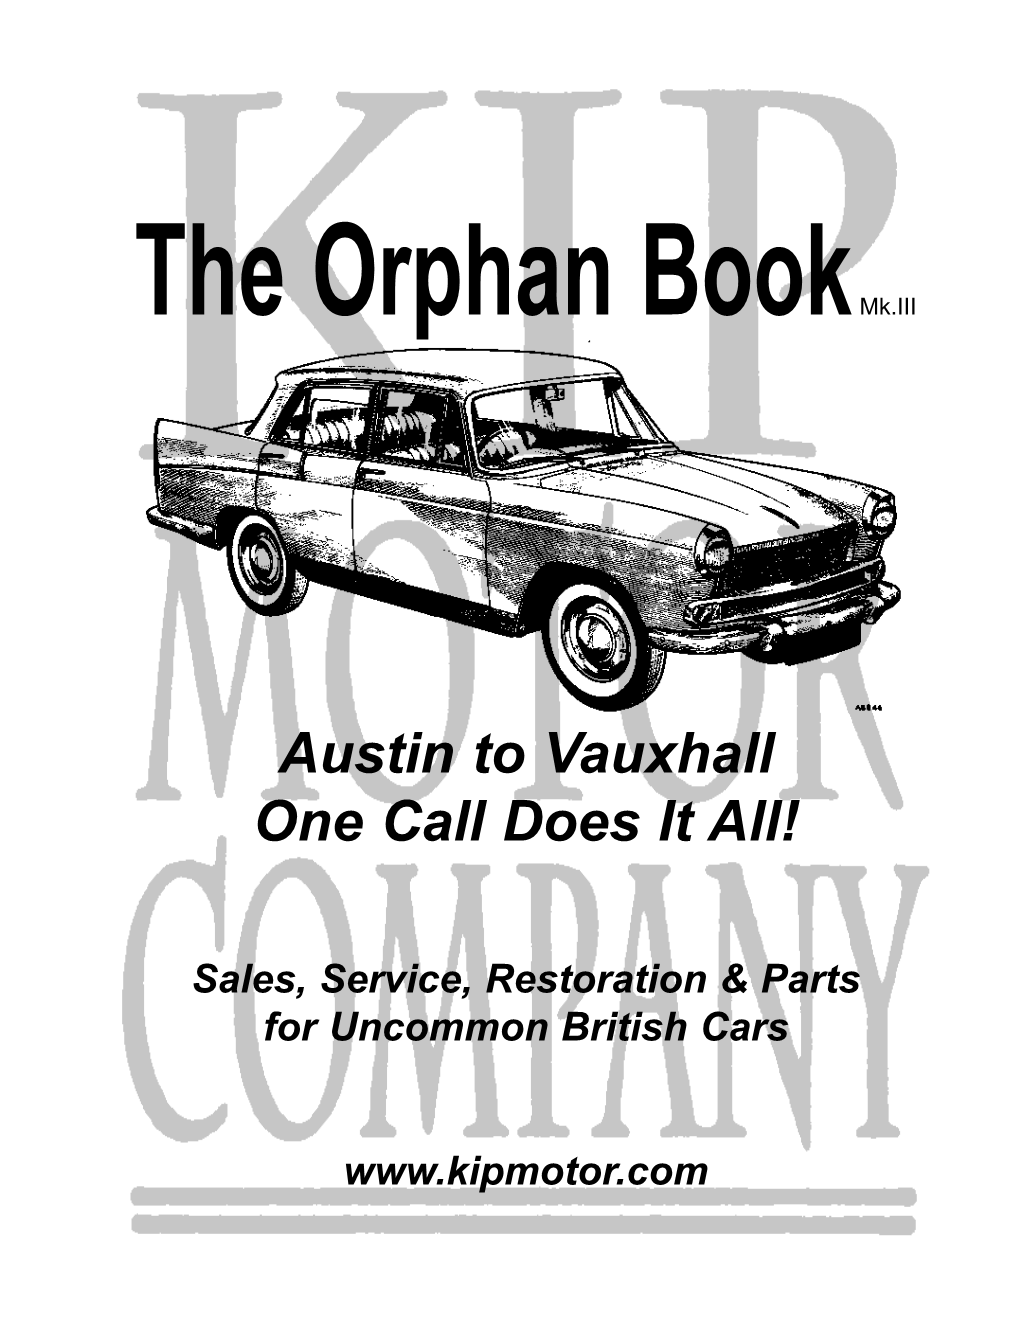 The Orphan Book Brakes